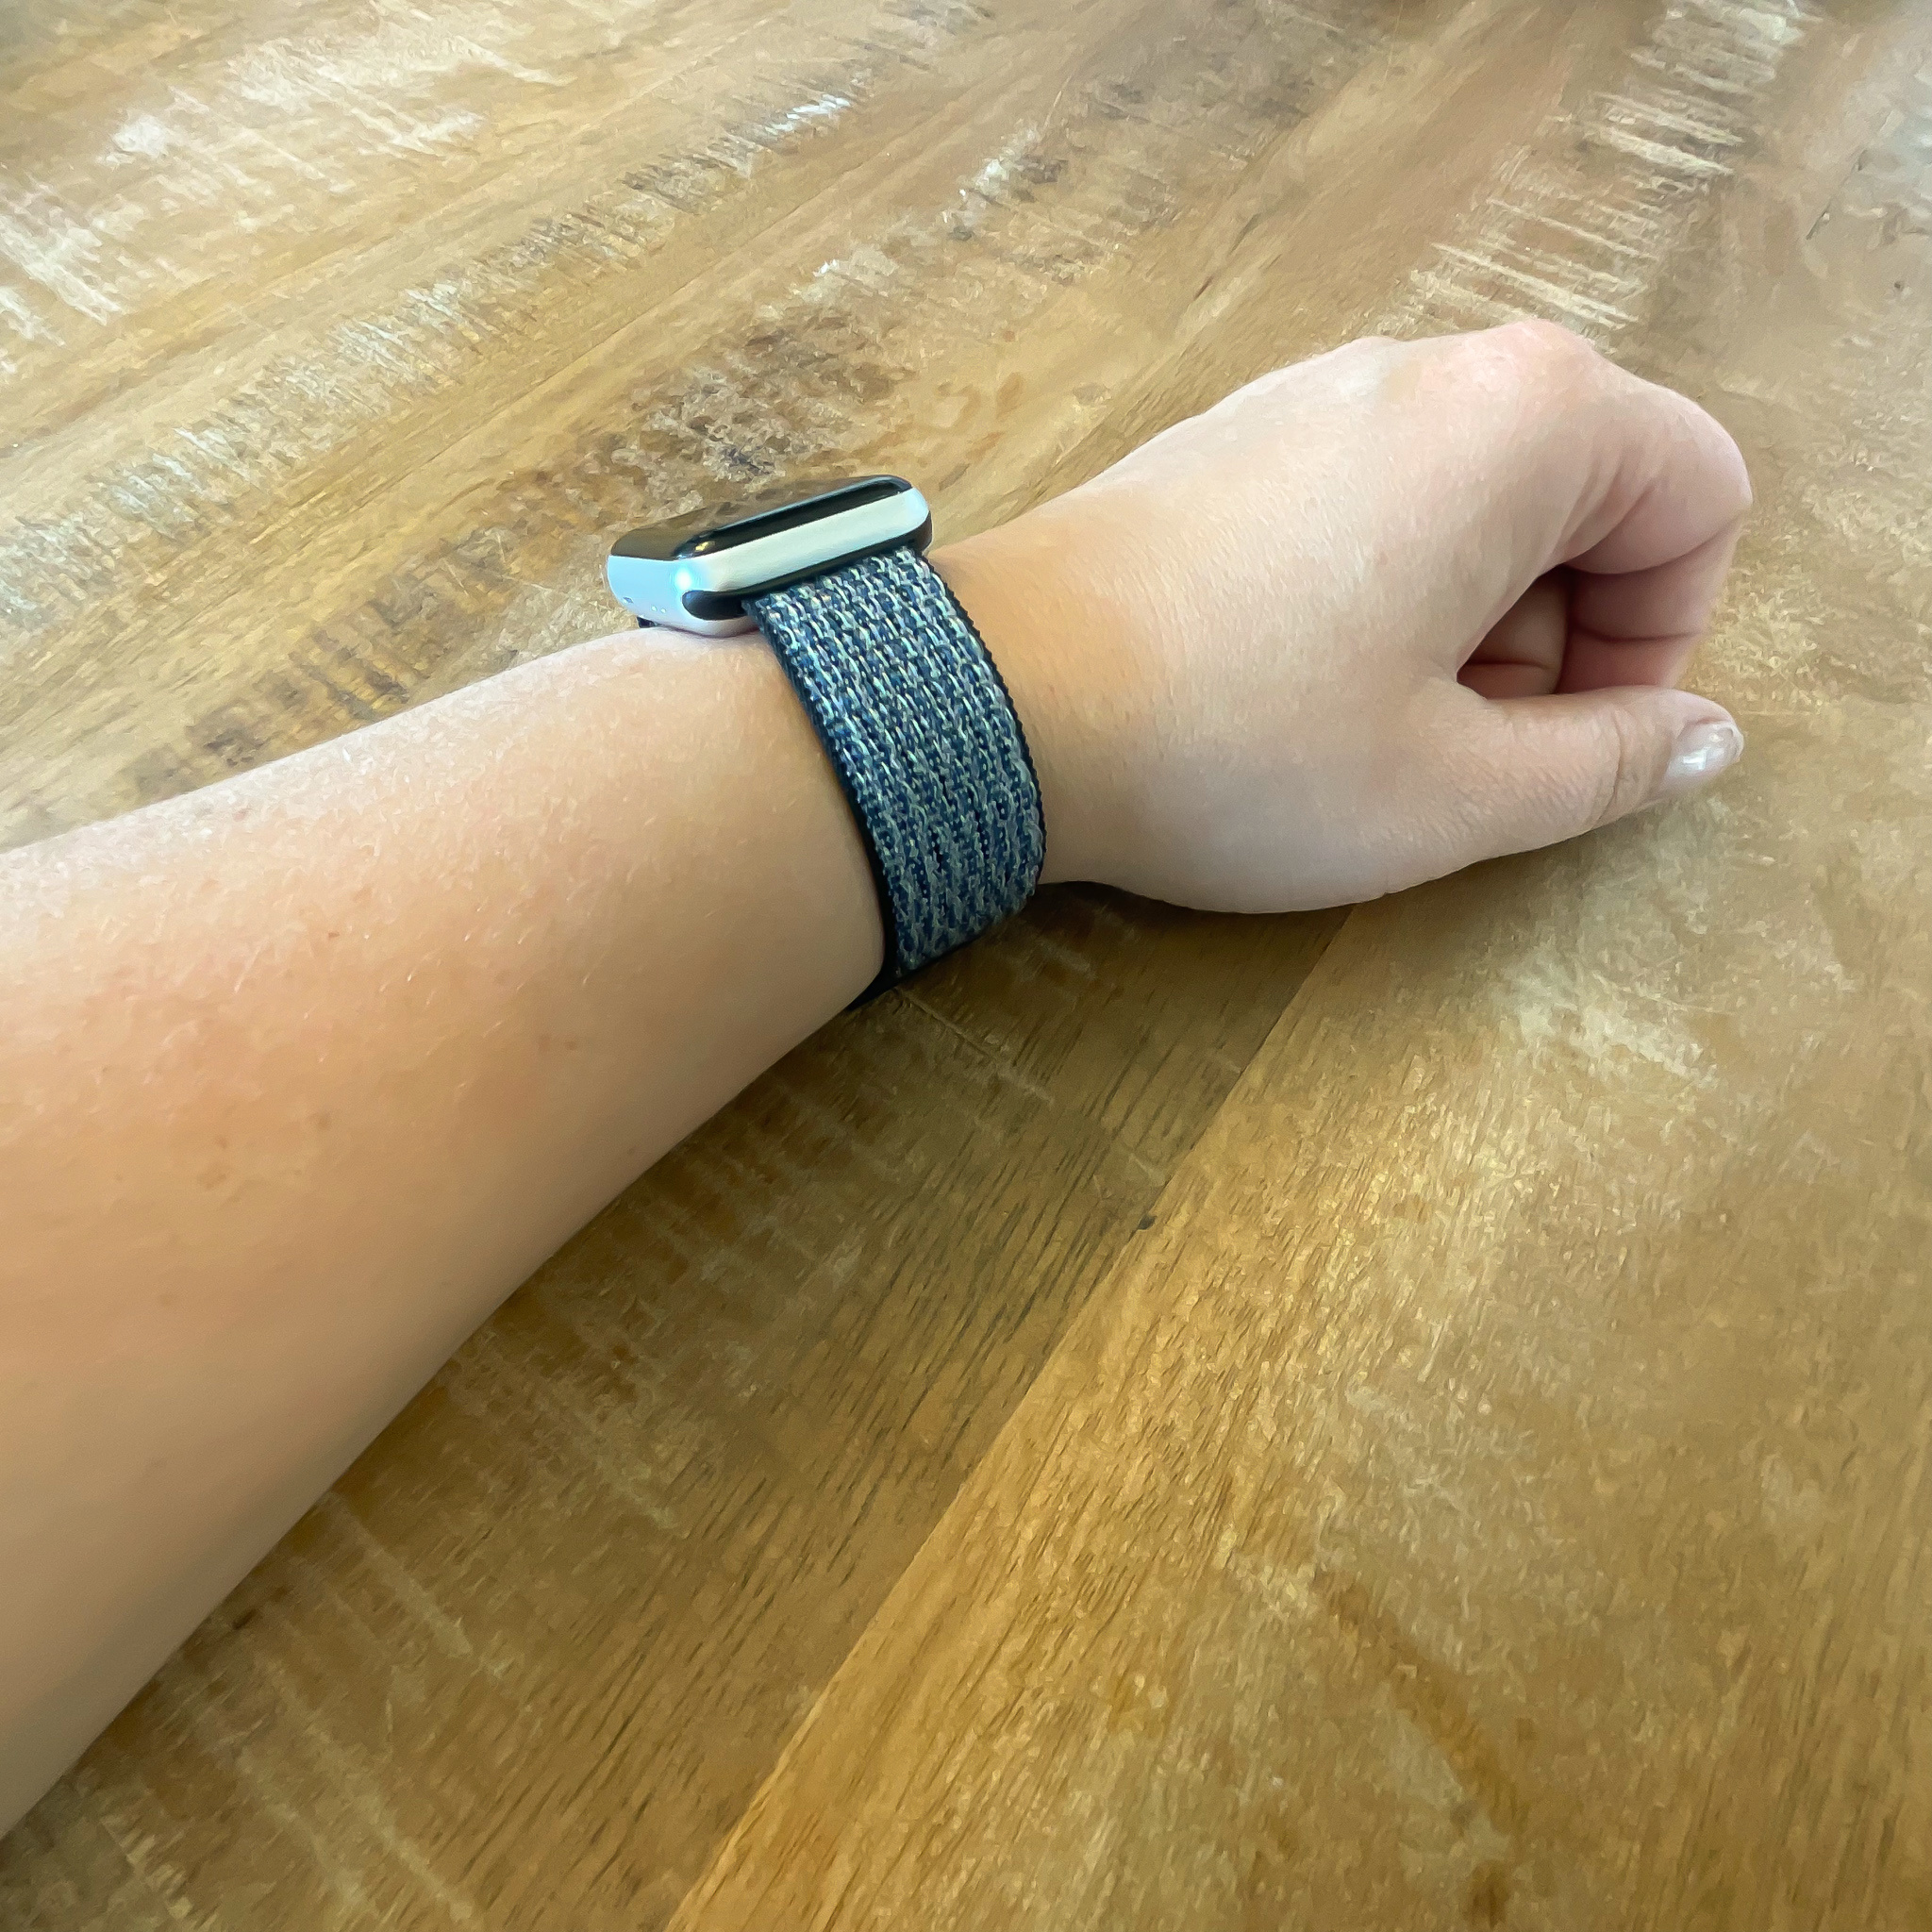 Bracelet boucle sport en nylon Apple Watch sportif - gris orageux